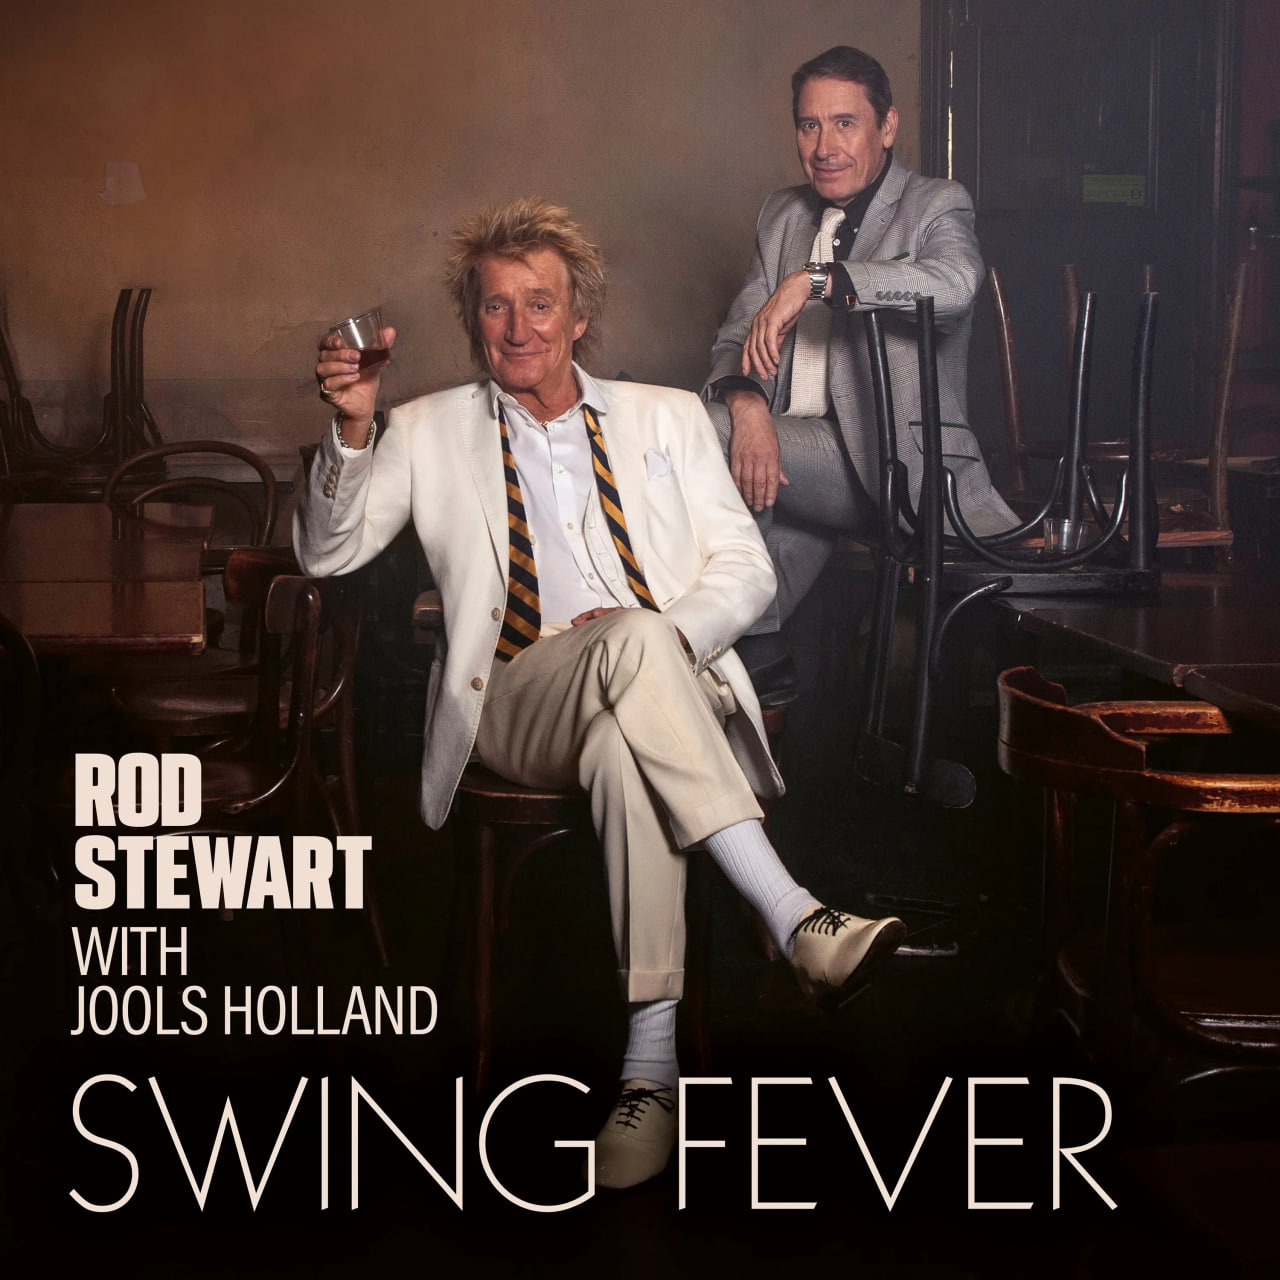 Джаз Warner Music Rod Stewart, Holland, Jools - Swing Fever (Green Vinyl LP) бсс семнадцать 1 й сингловый альбом second wind weverse albums ver